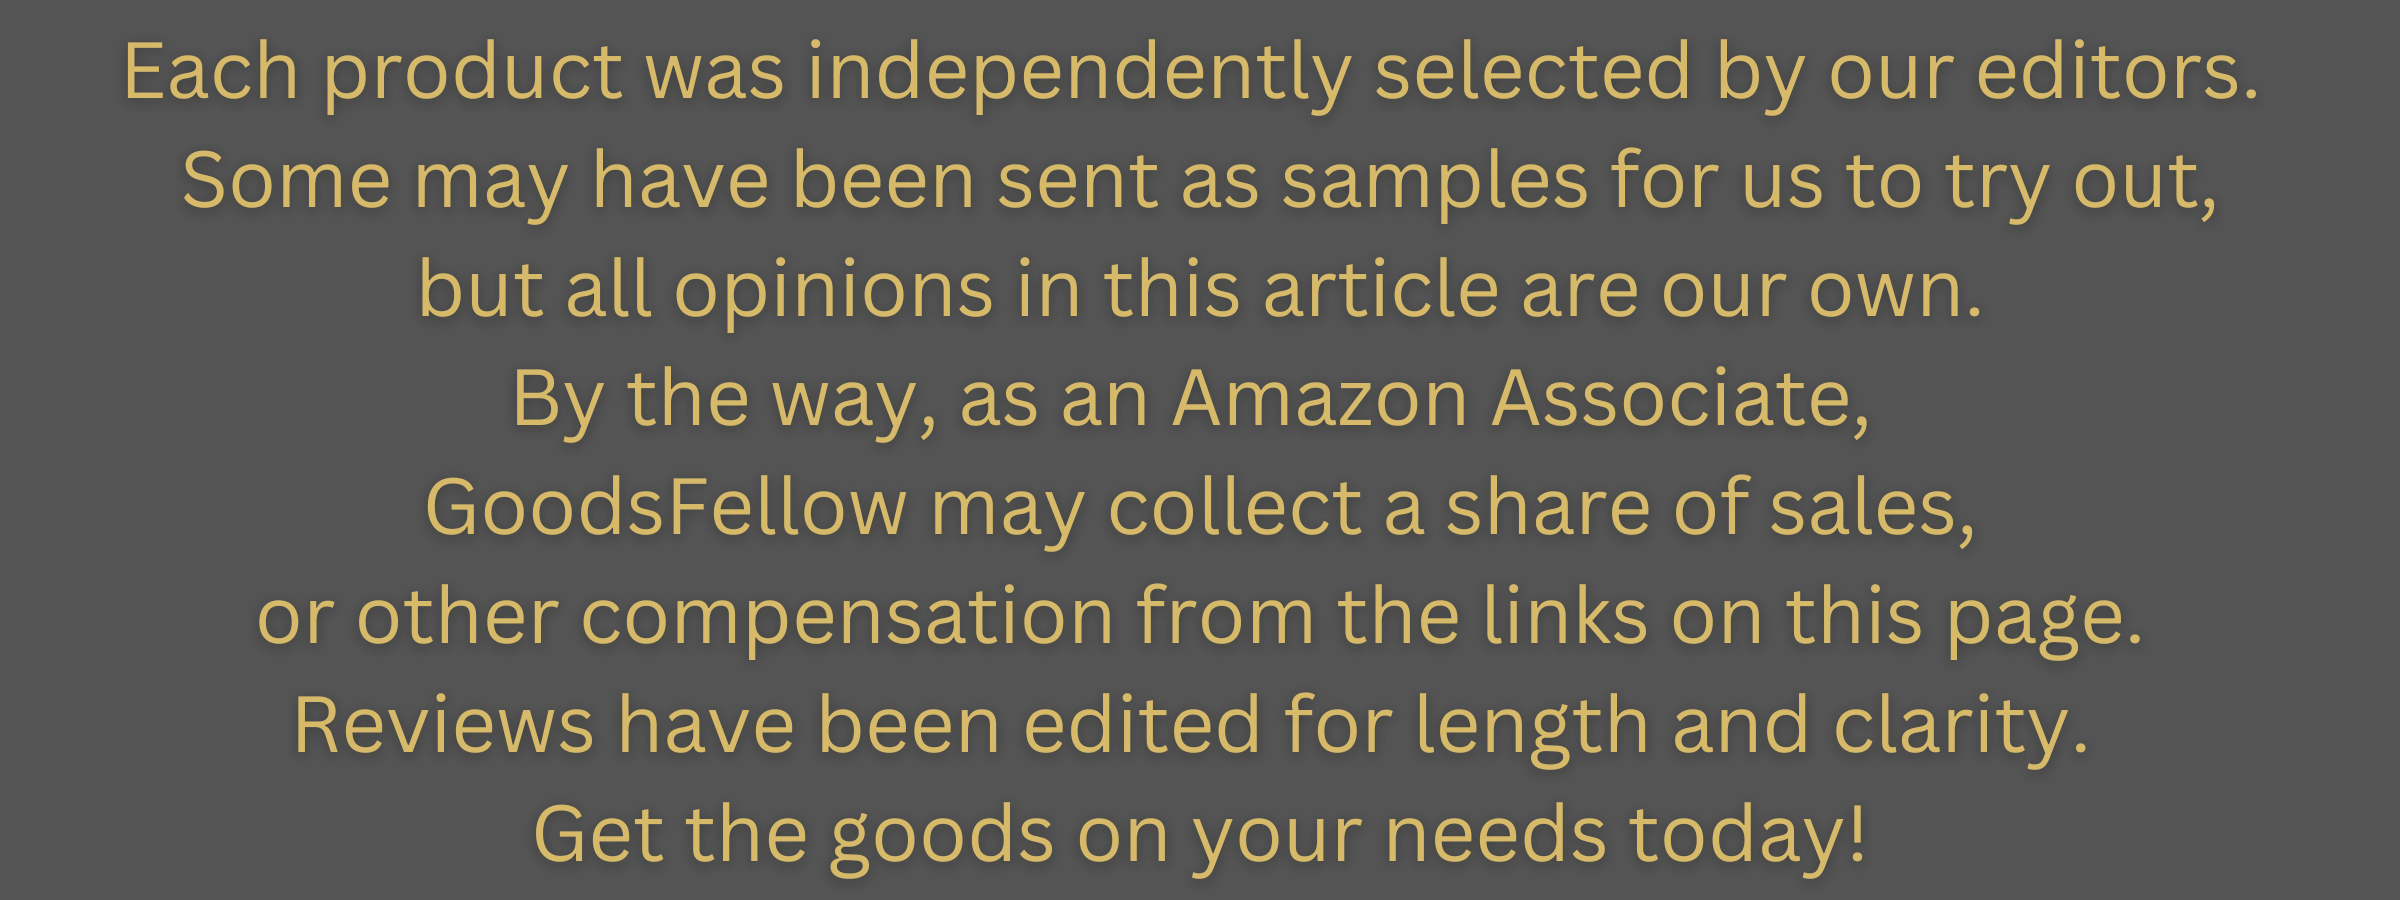 Amazon Associates Commisson Disclosure